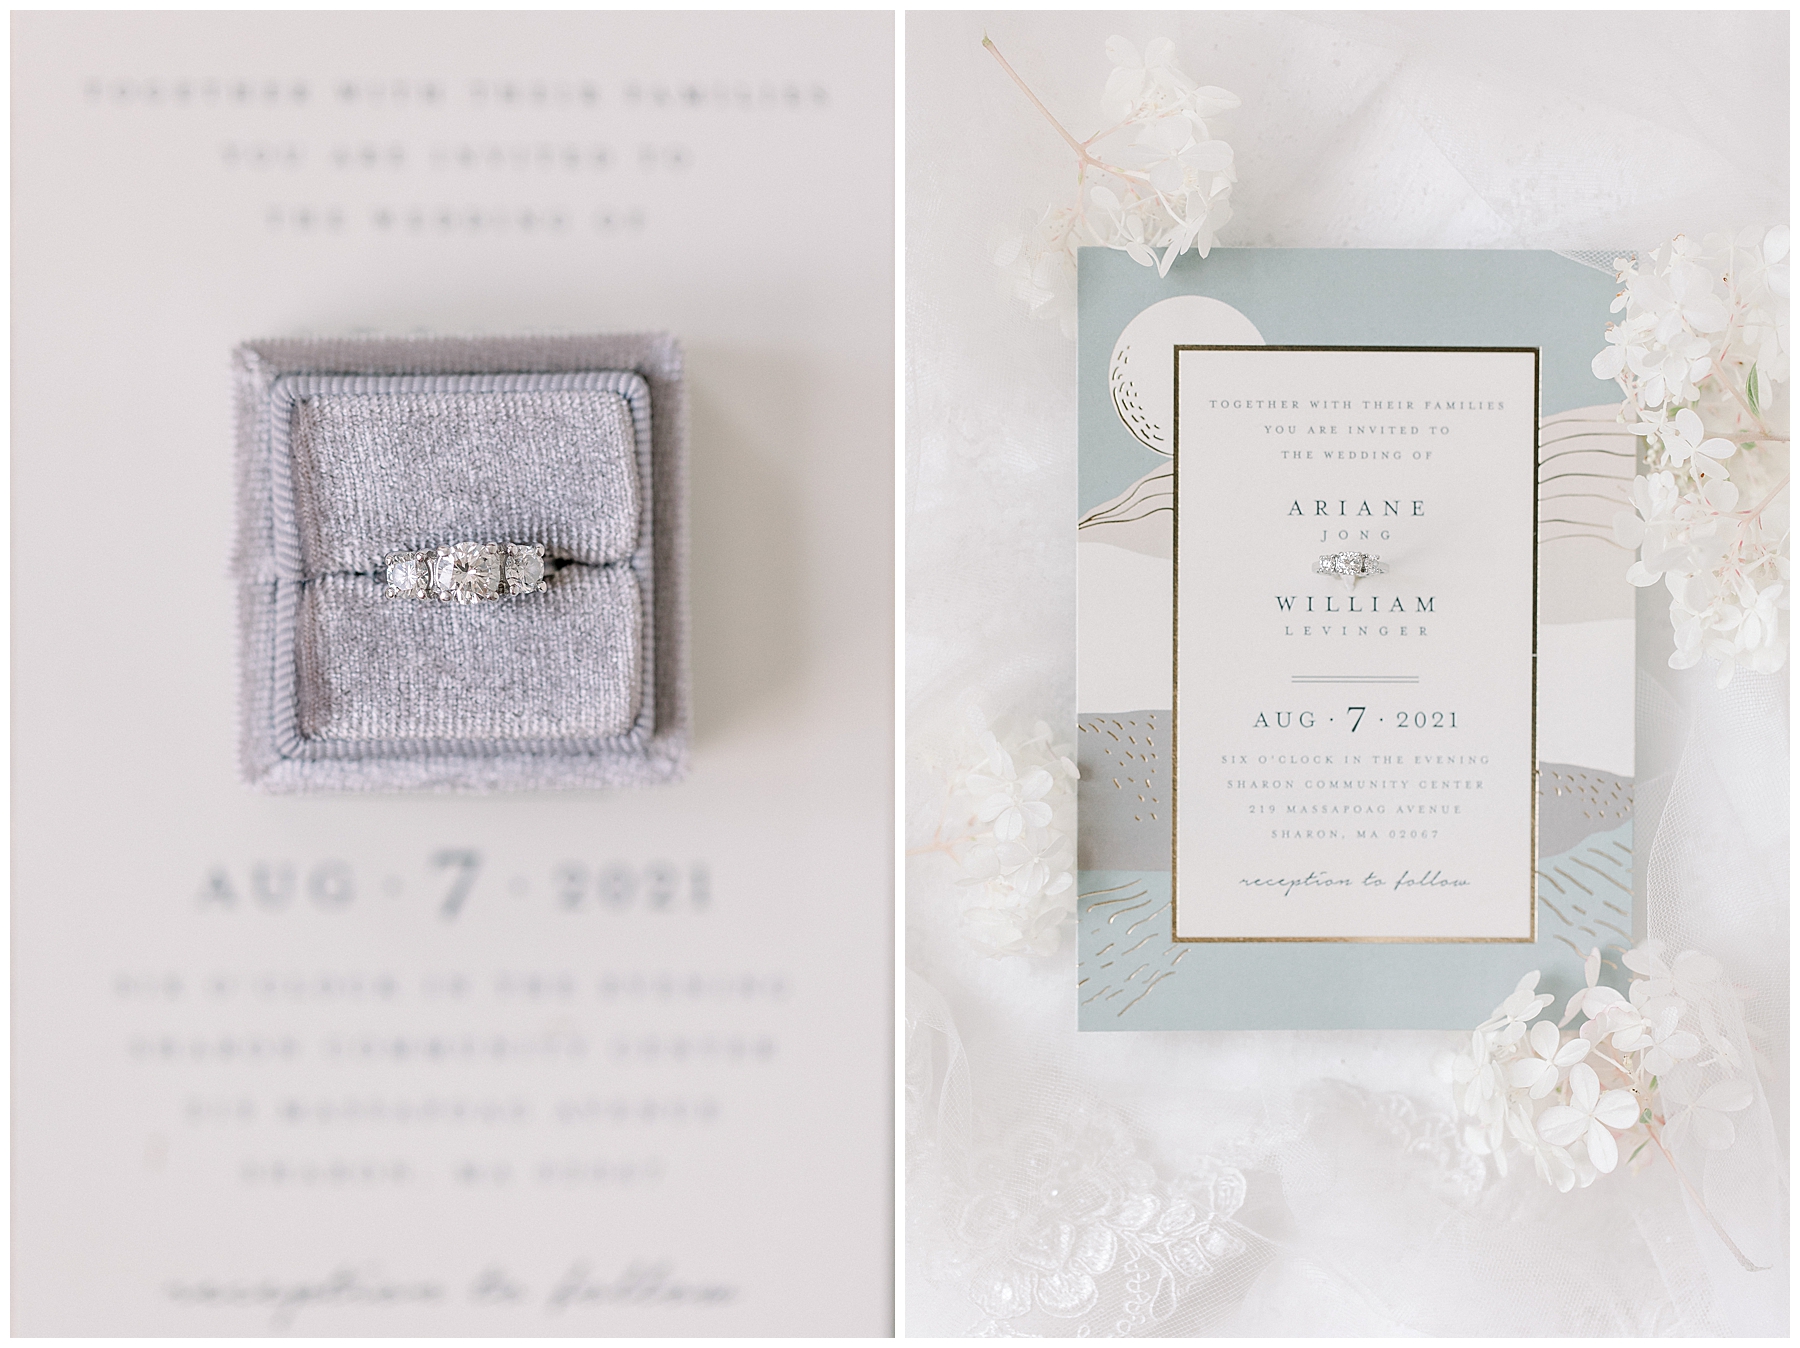 wedding invitations and wedding ring from Sharon Ma wedding